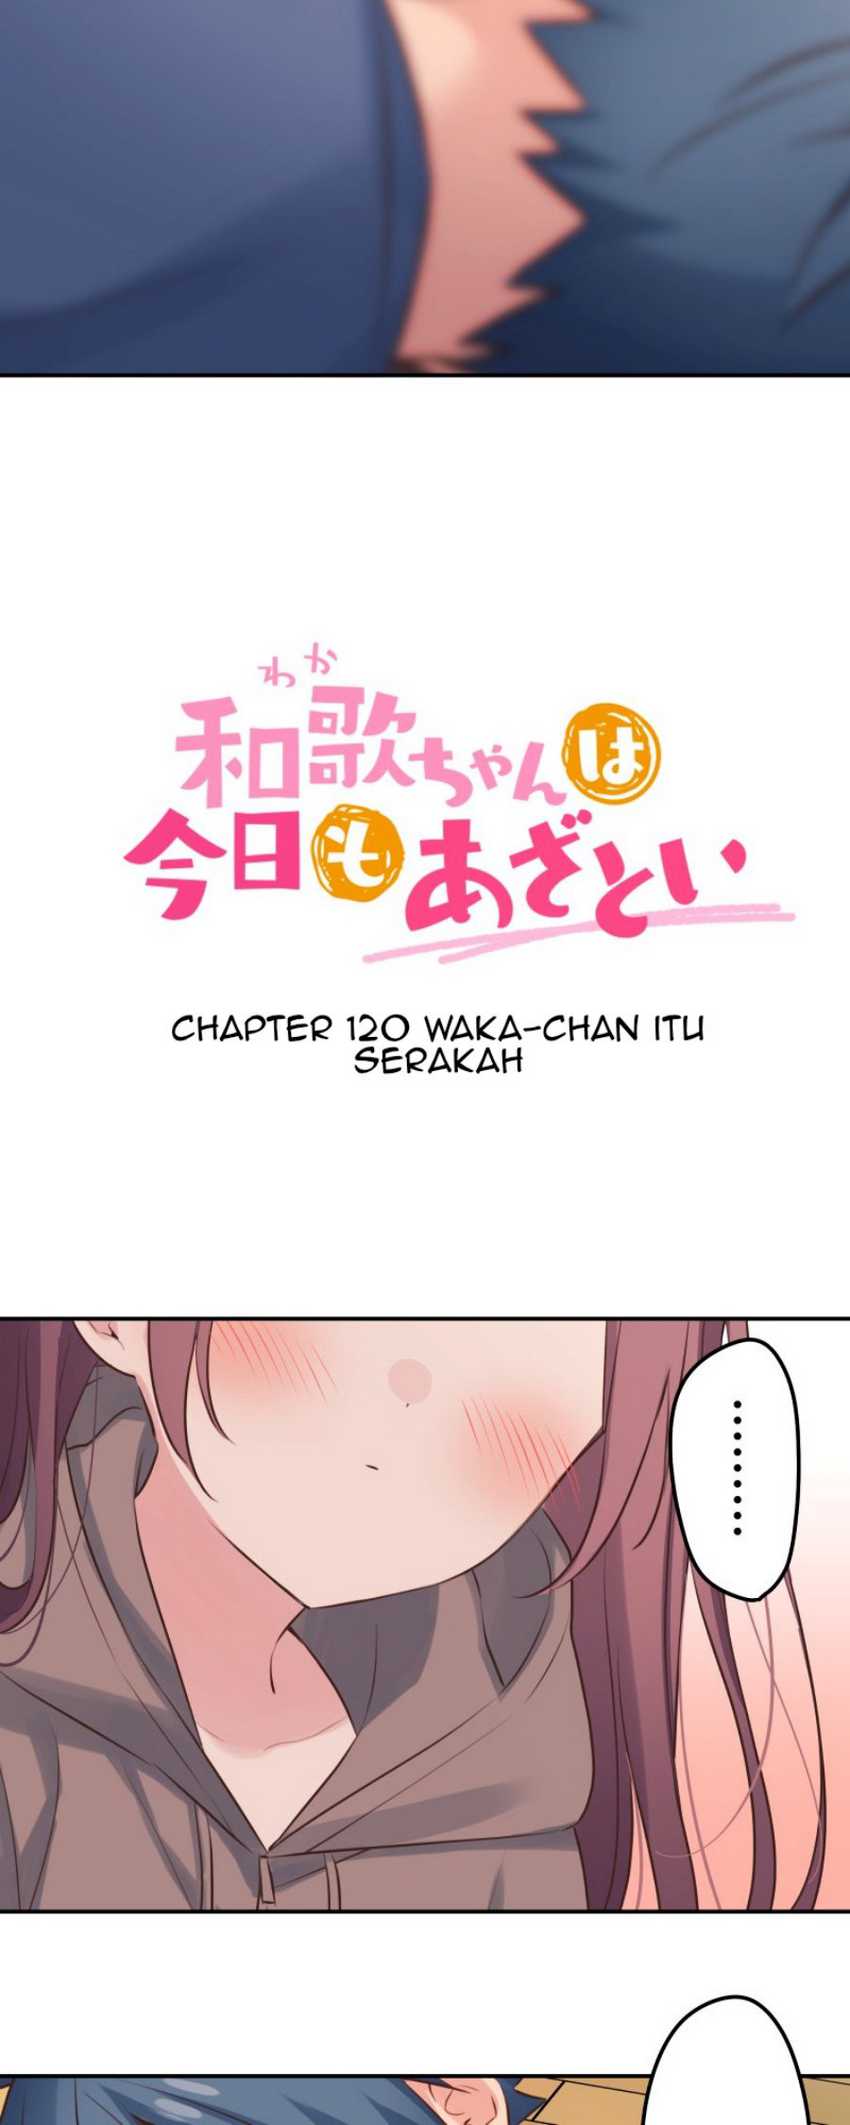 Waka-chan Is Flirty Again Chapter 120